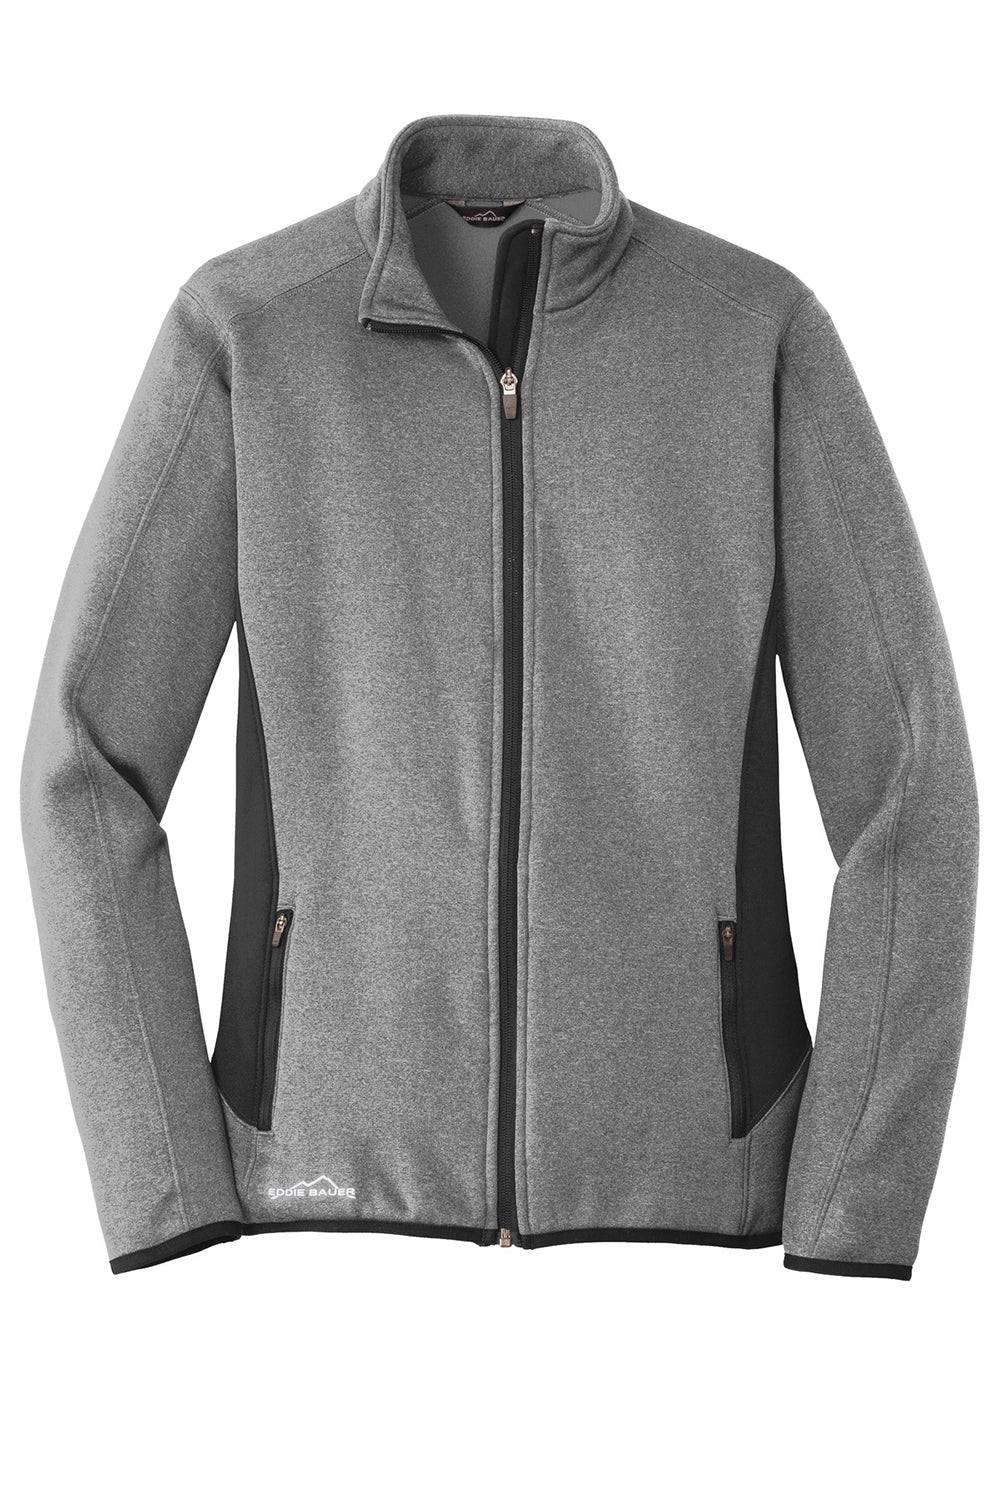 Eddie Bauer EB239 Womens Full Zip Fleece Jacket Heather Grey Flat Front